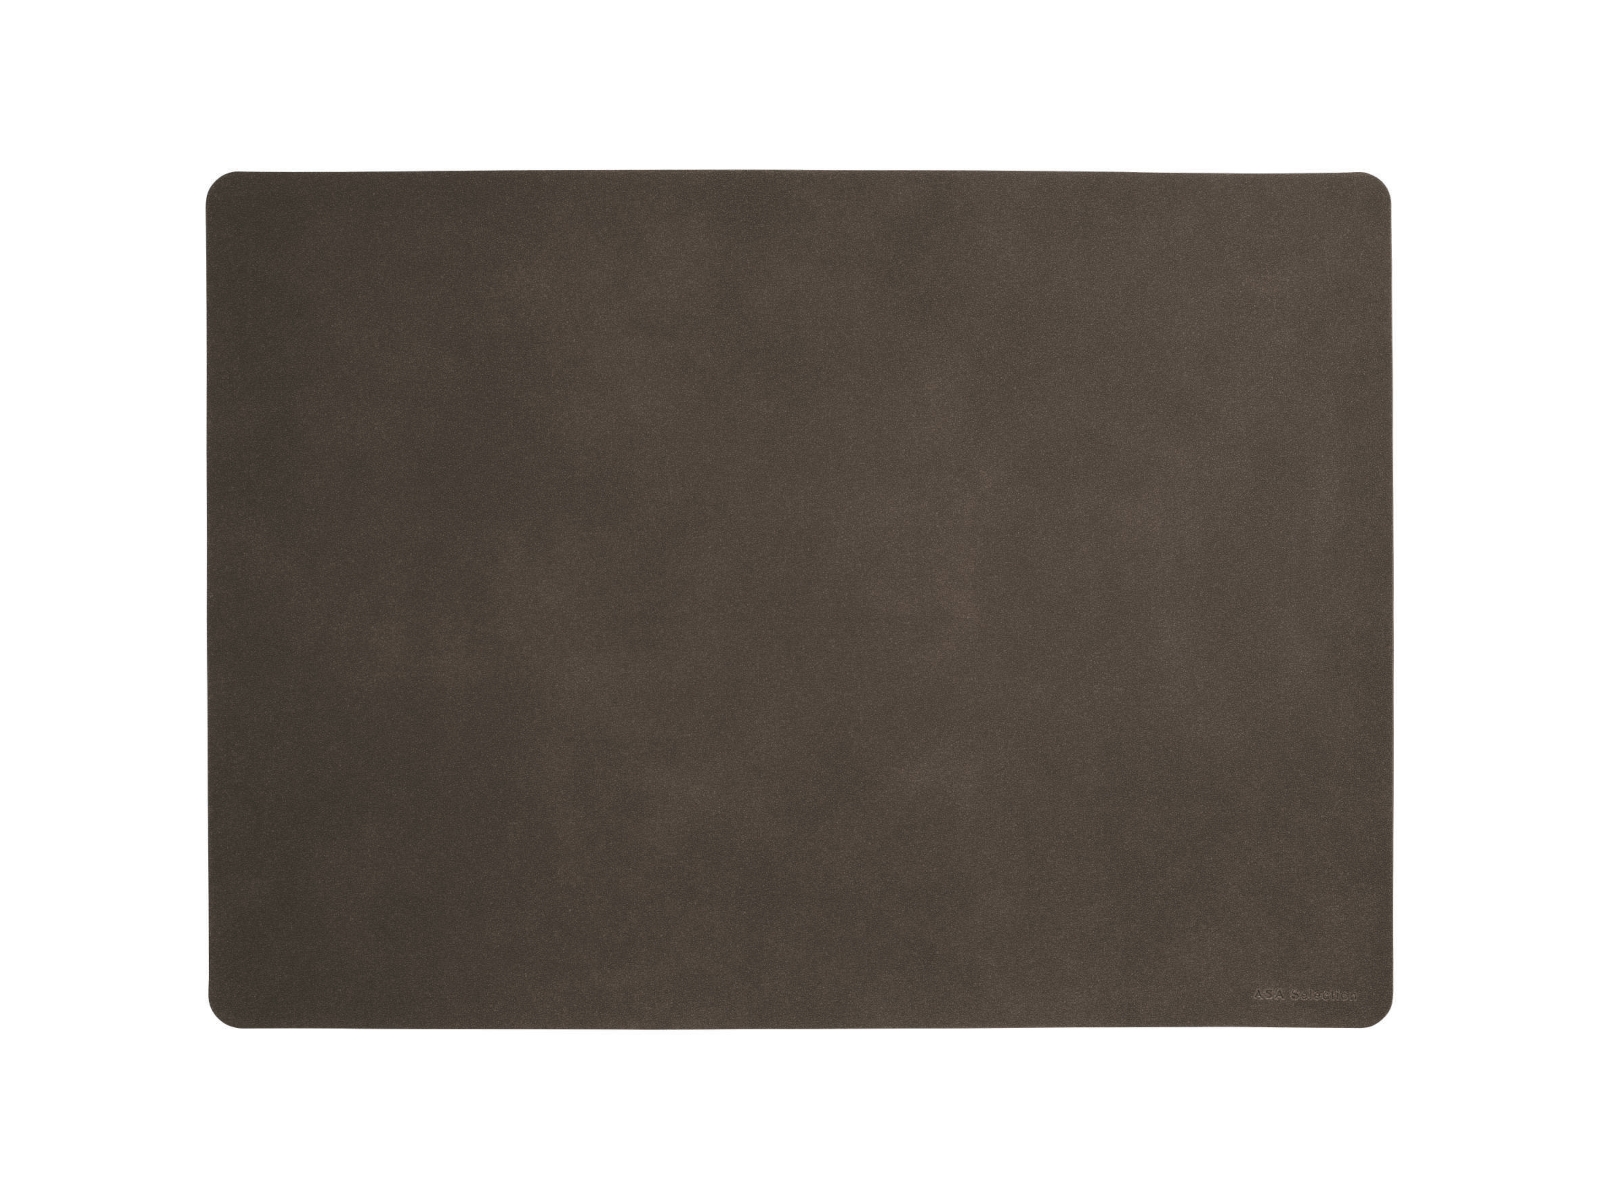 ASA Tischset soft leather earth 46 x 33 cm